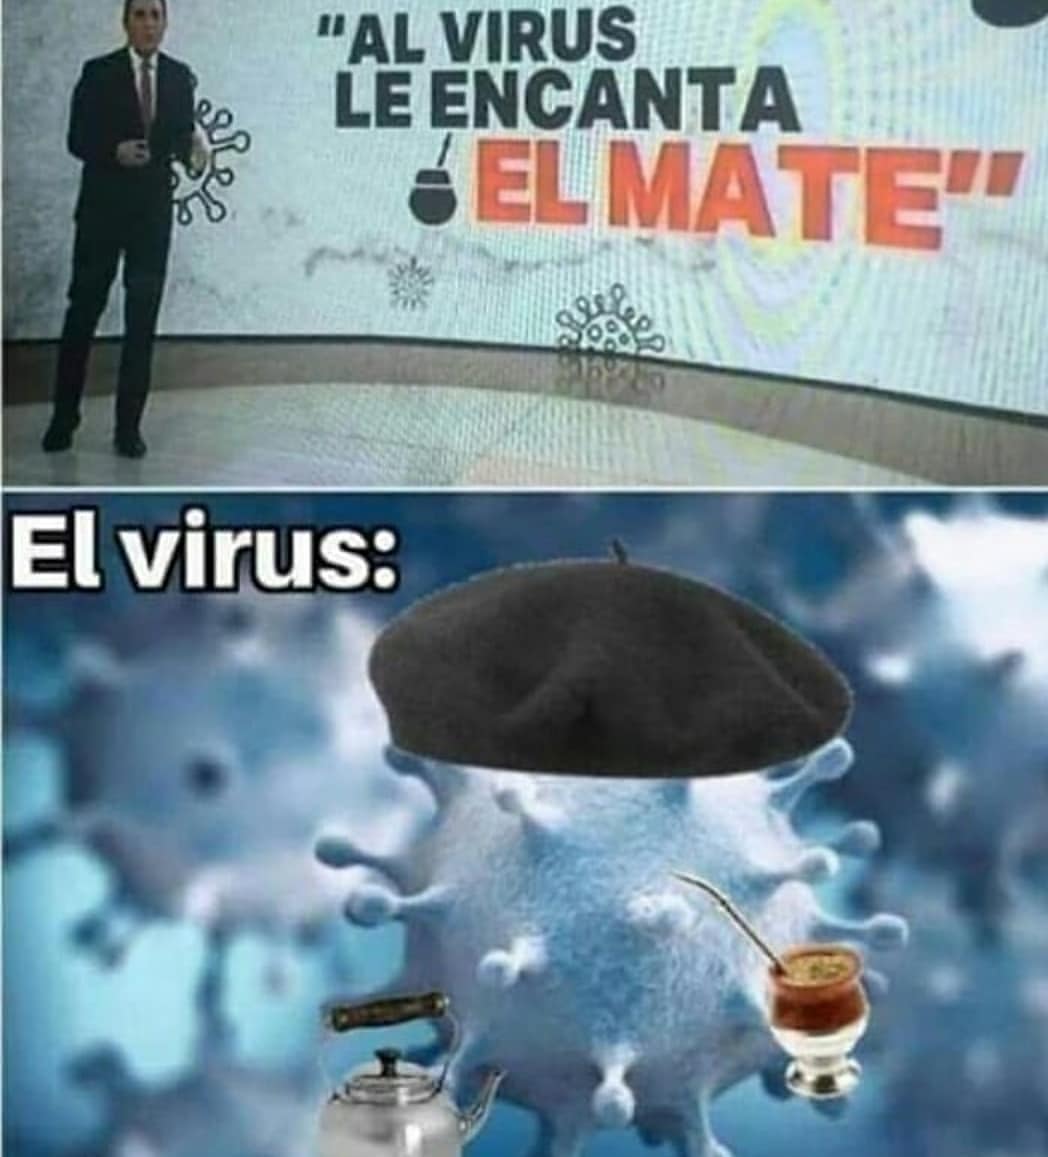 "Al virus le encanta el mate".  El virus: